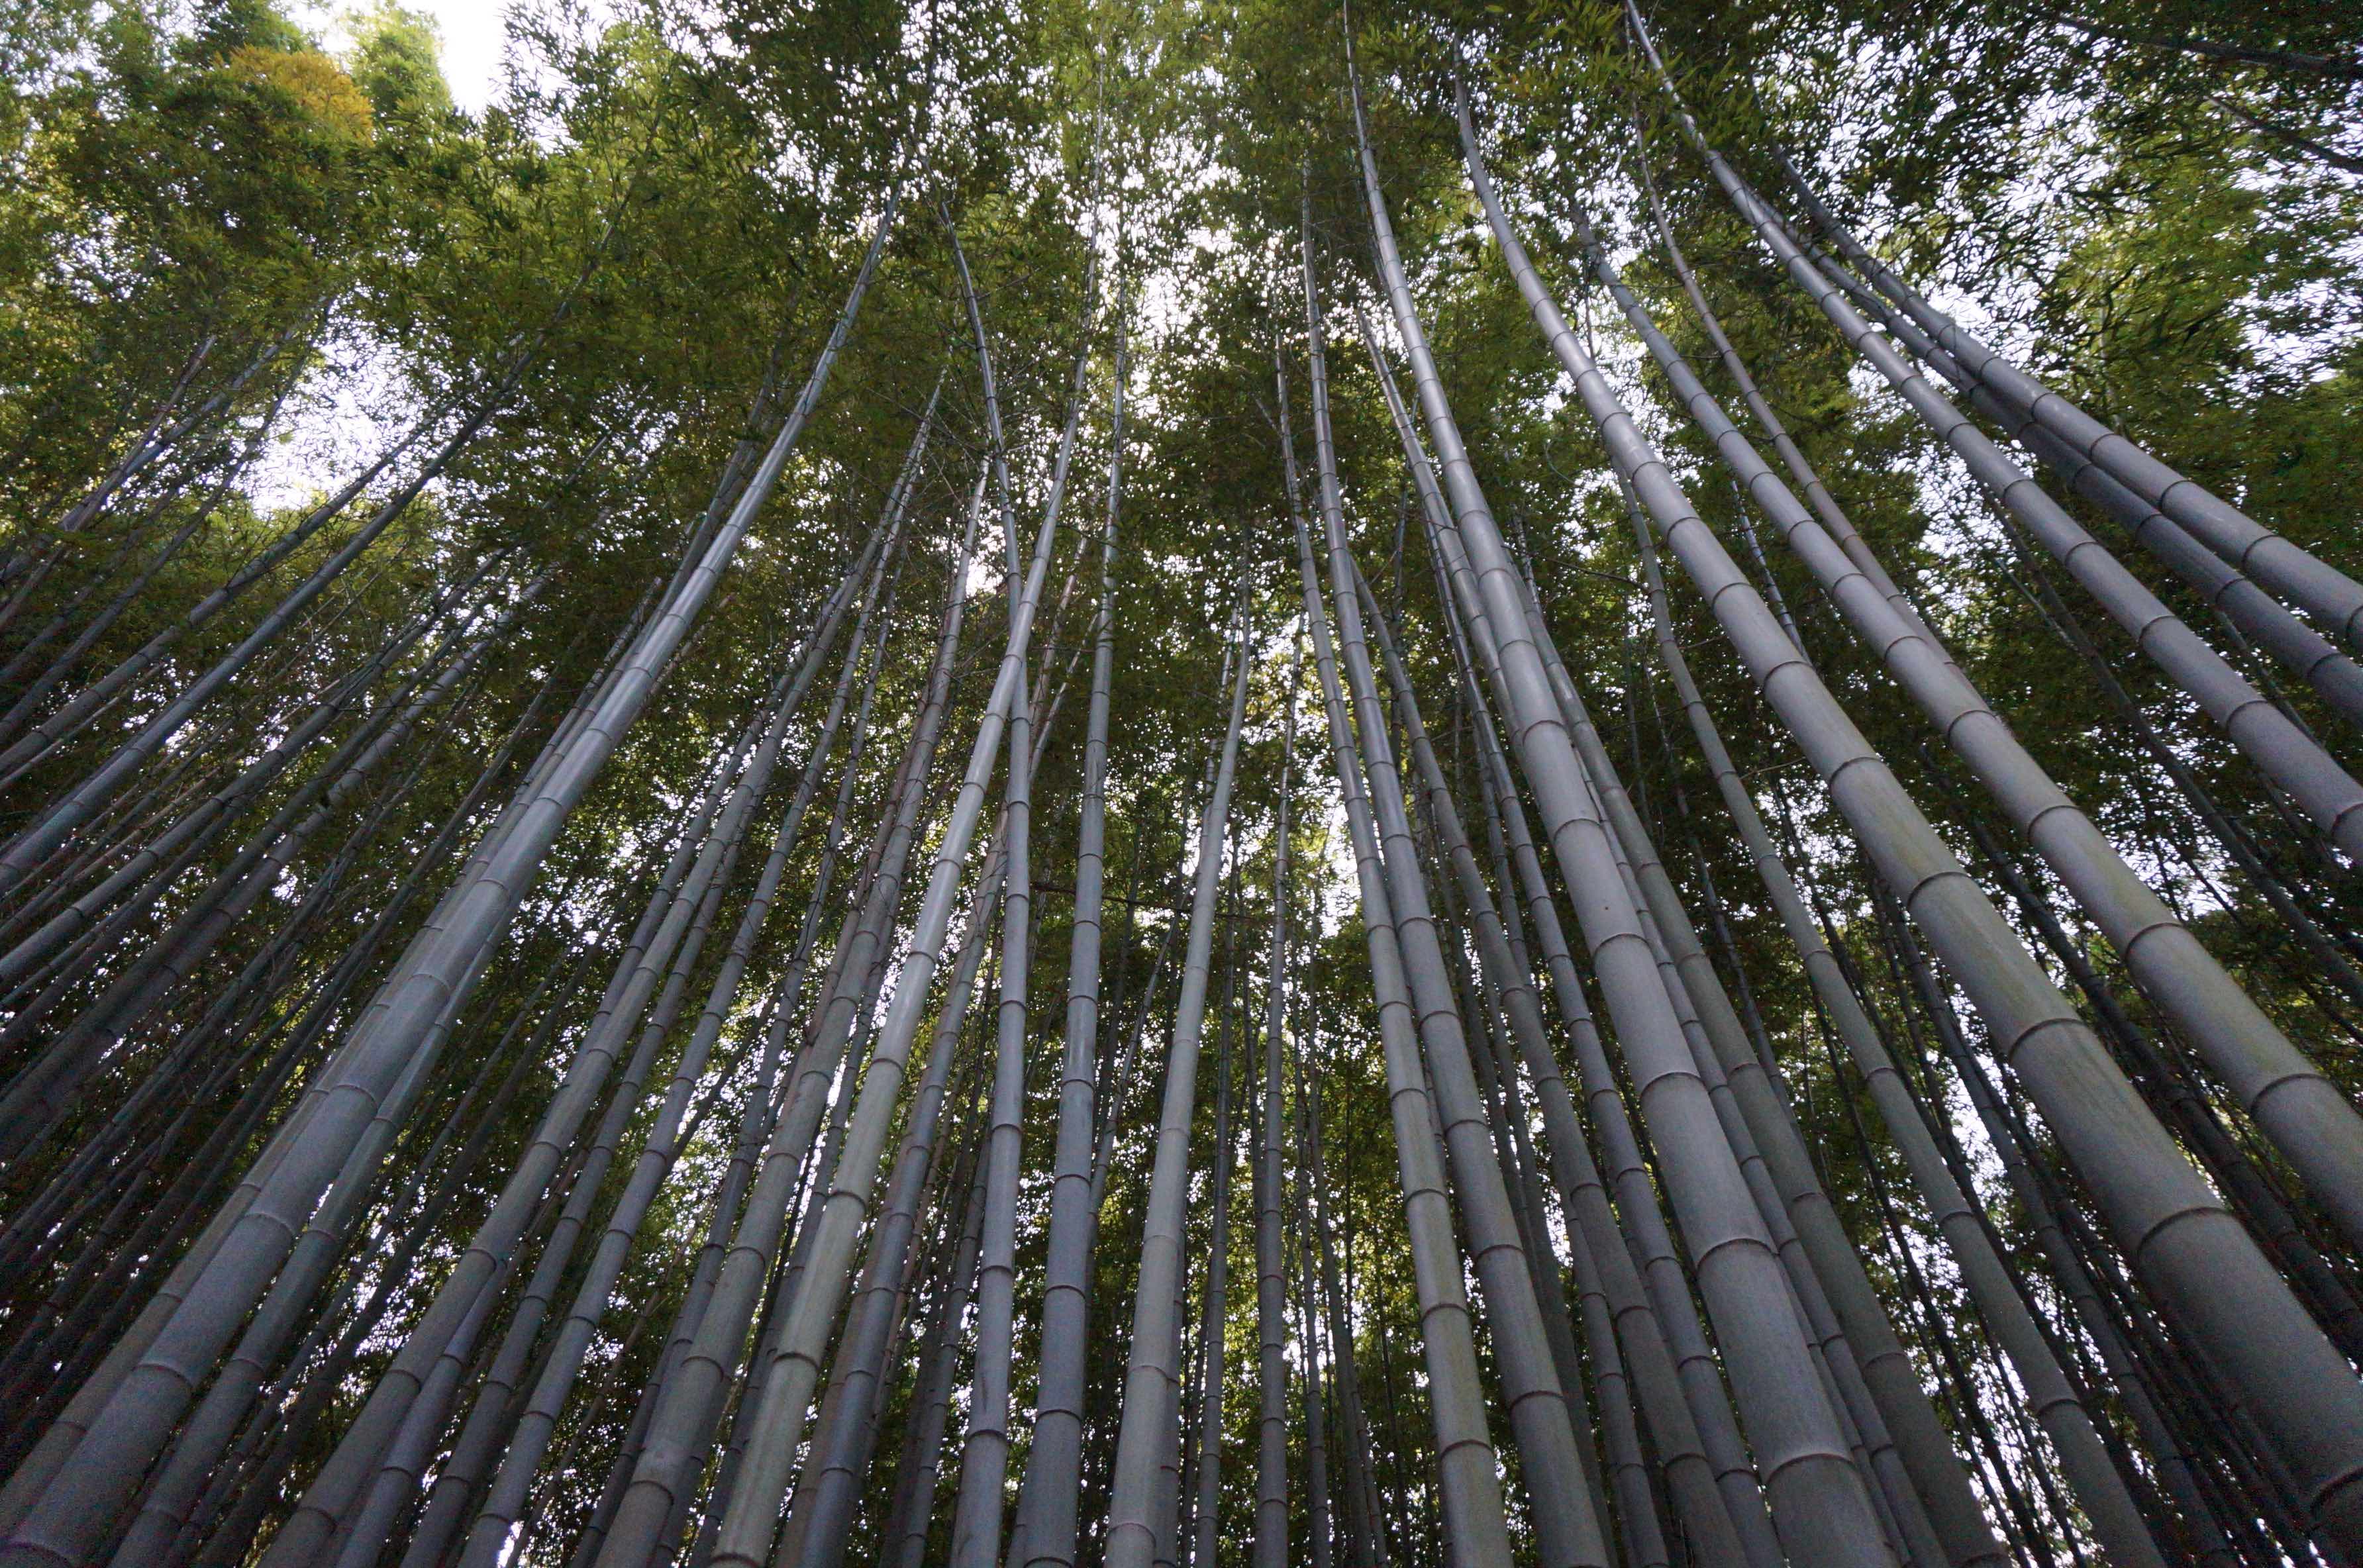 bambouseraie arashiyama, kyoto, japon